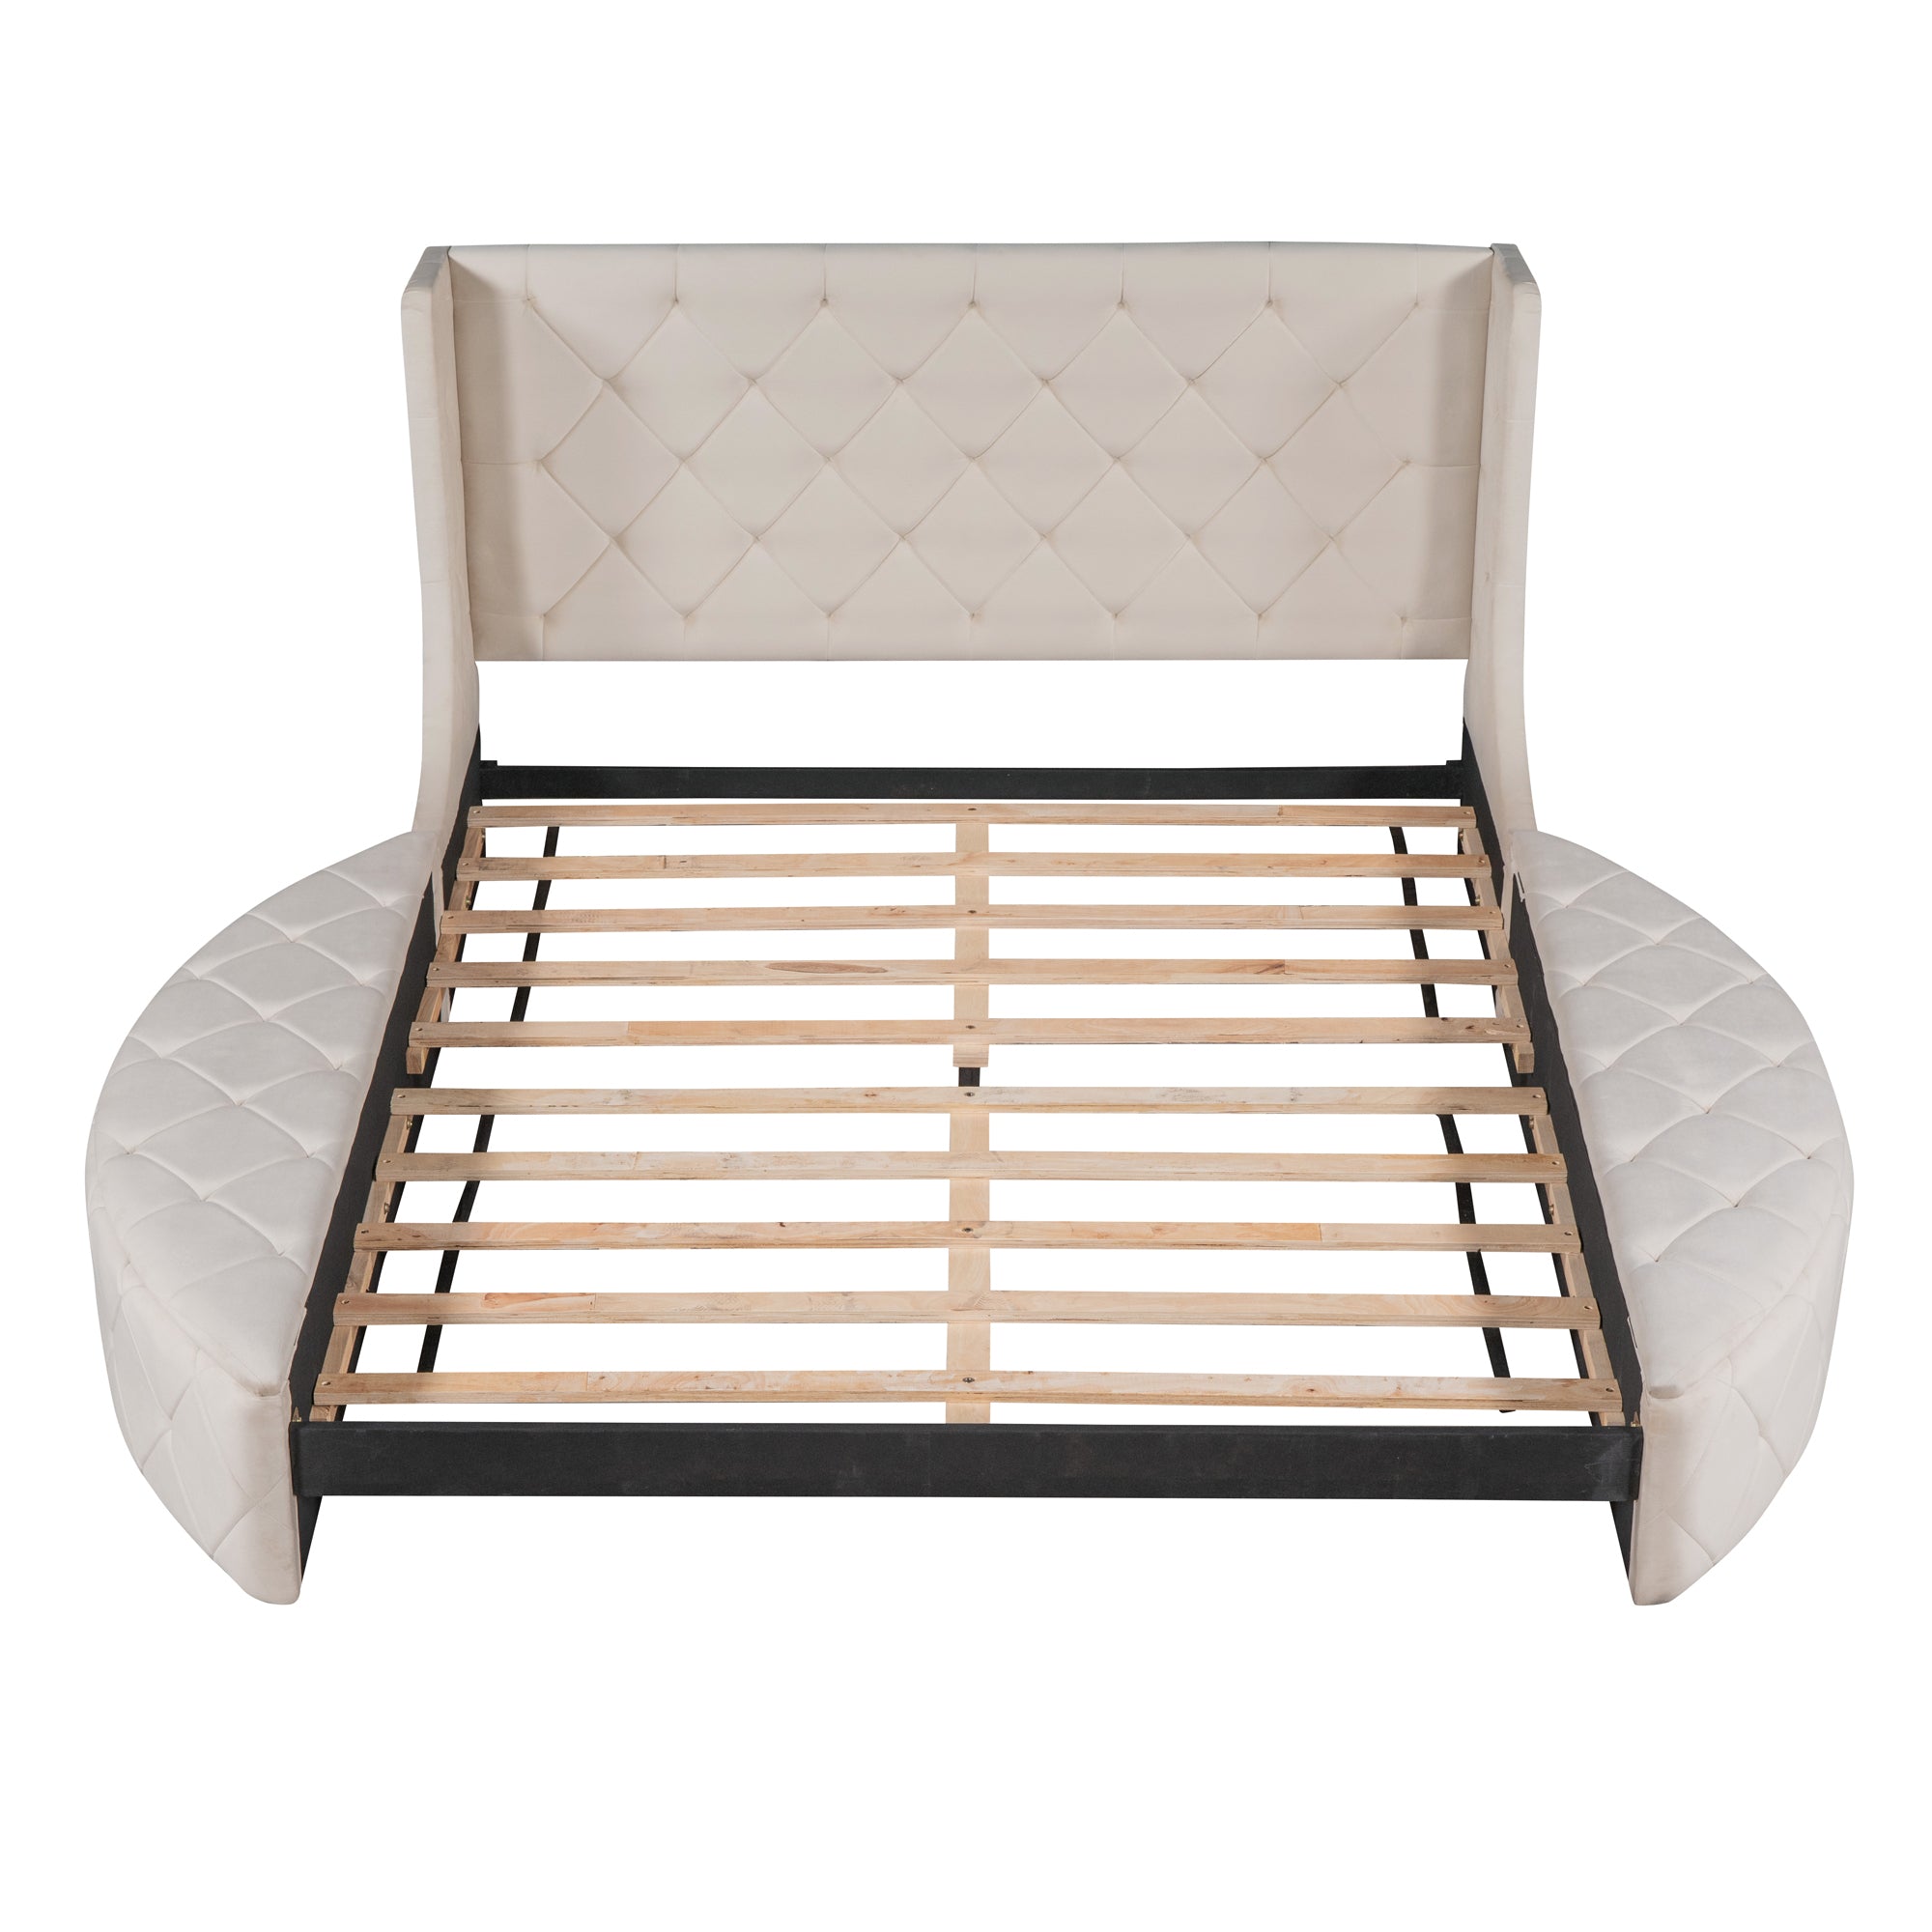 Queen Size Storage Velvet Bed Upholstered Platform with Wingback Headboard -Beige